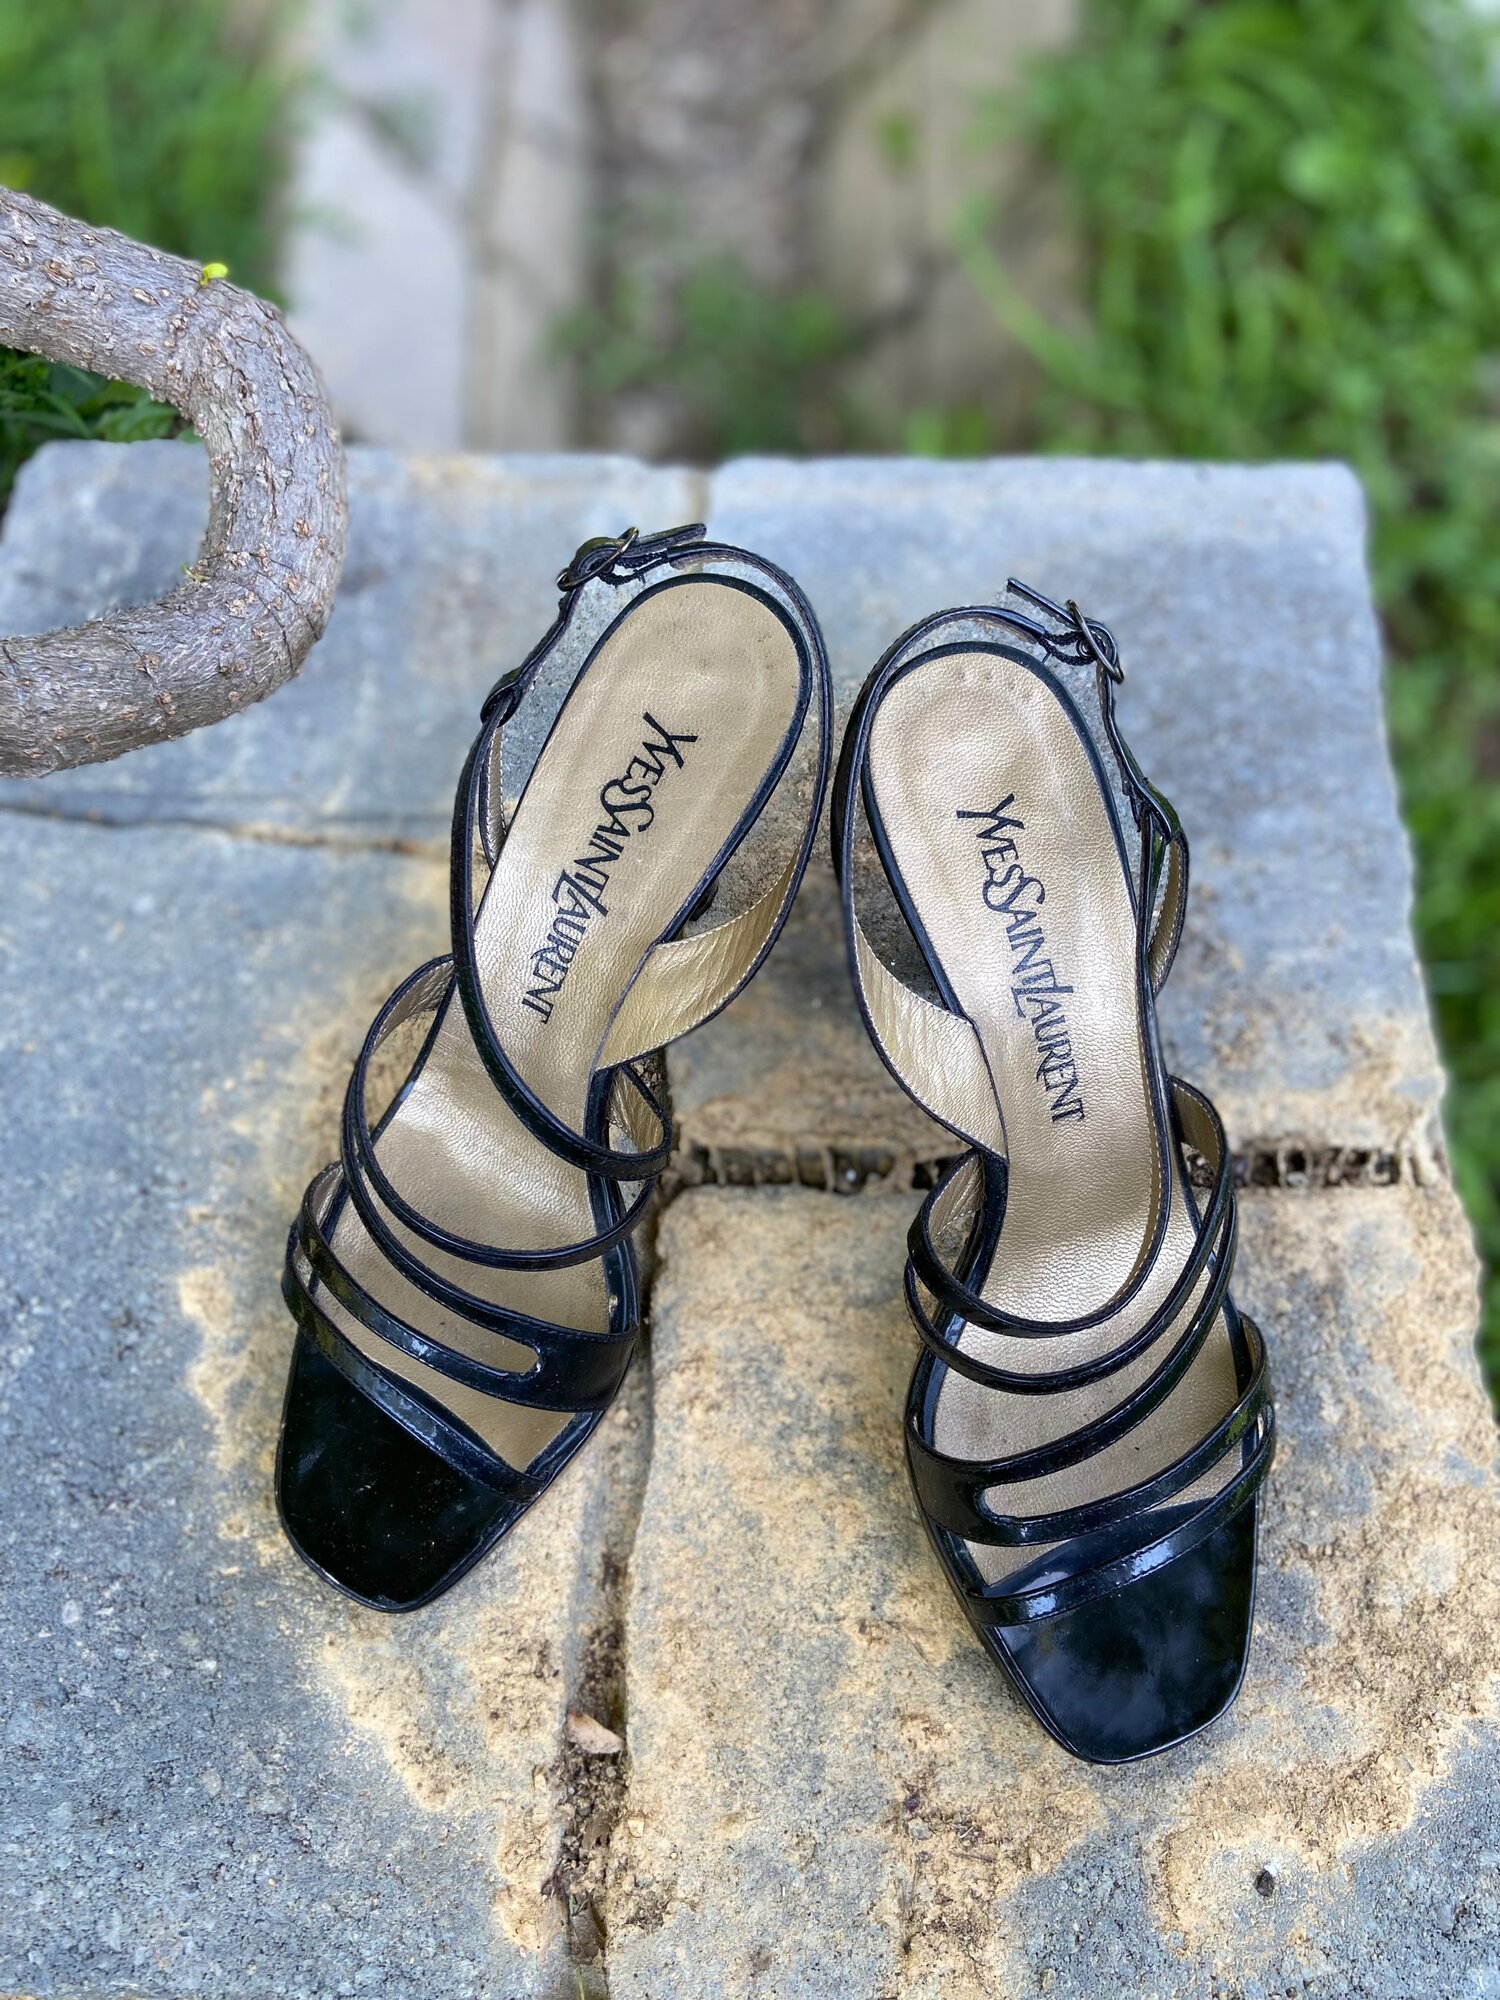 Schoenen damesschoenen Sandalen Slingbacks & Slides Vintage jaren 1980 tot 90 Yves Saint Laurent Patent Leather Strappy Sandals 5.5 